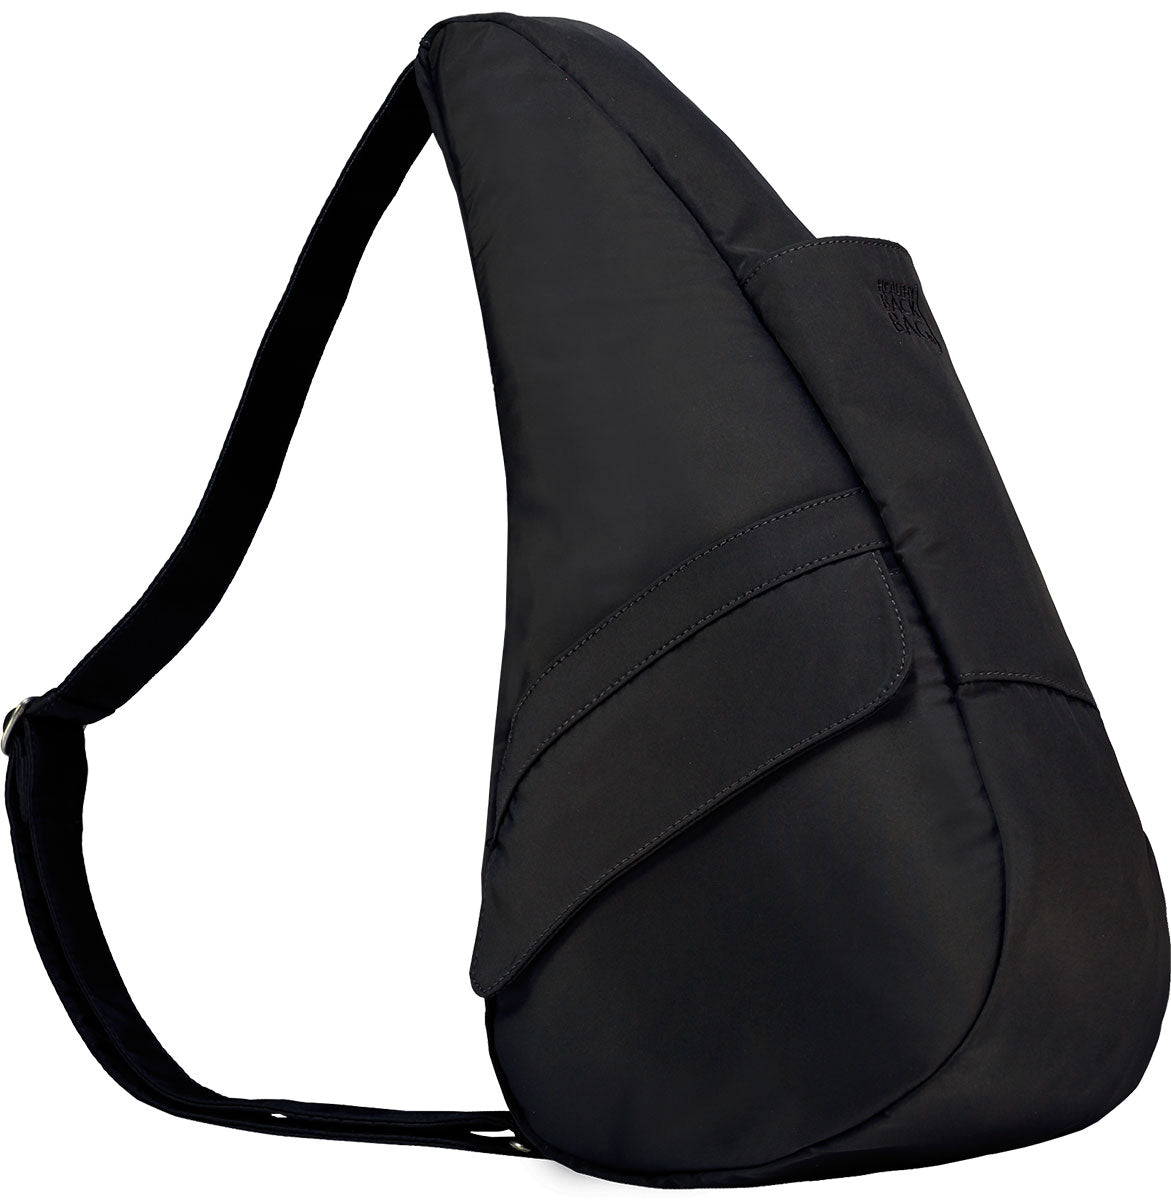 AmeriBag Healthy Back Bag tote Microfiber Extra Small (Black)